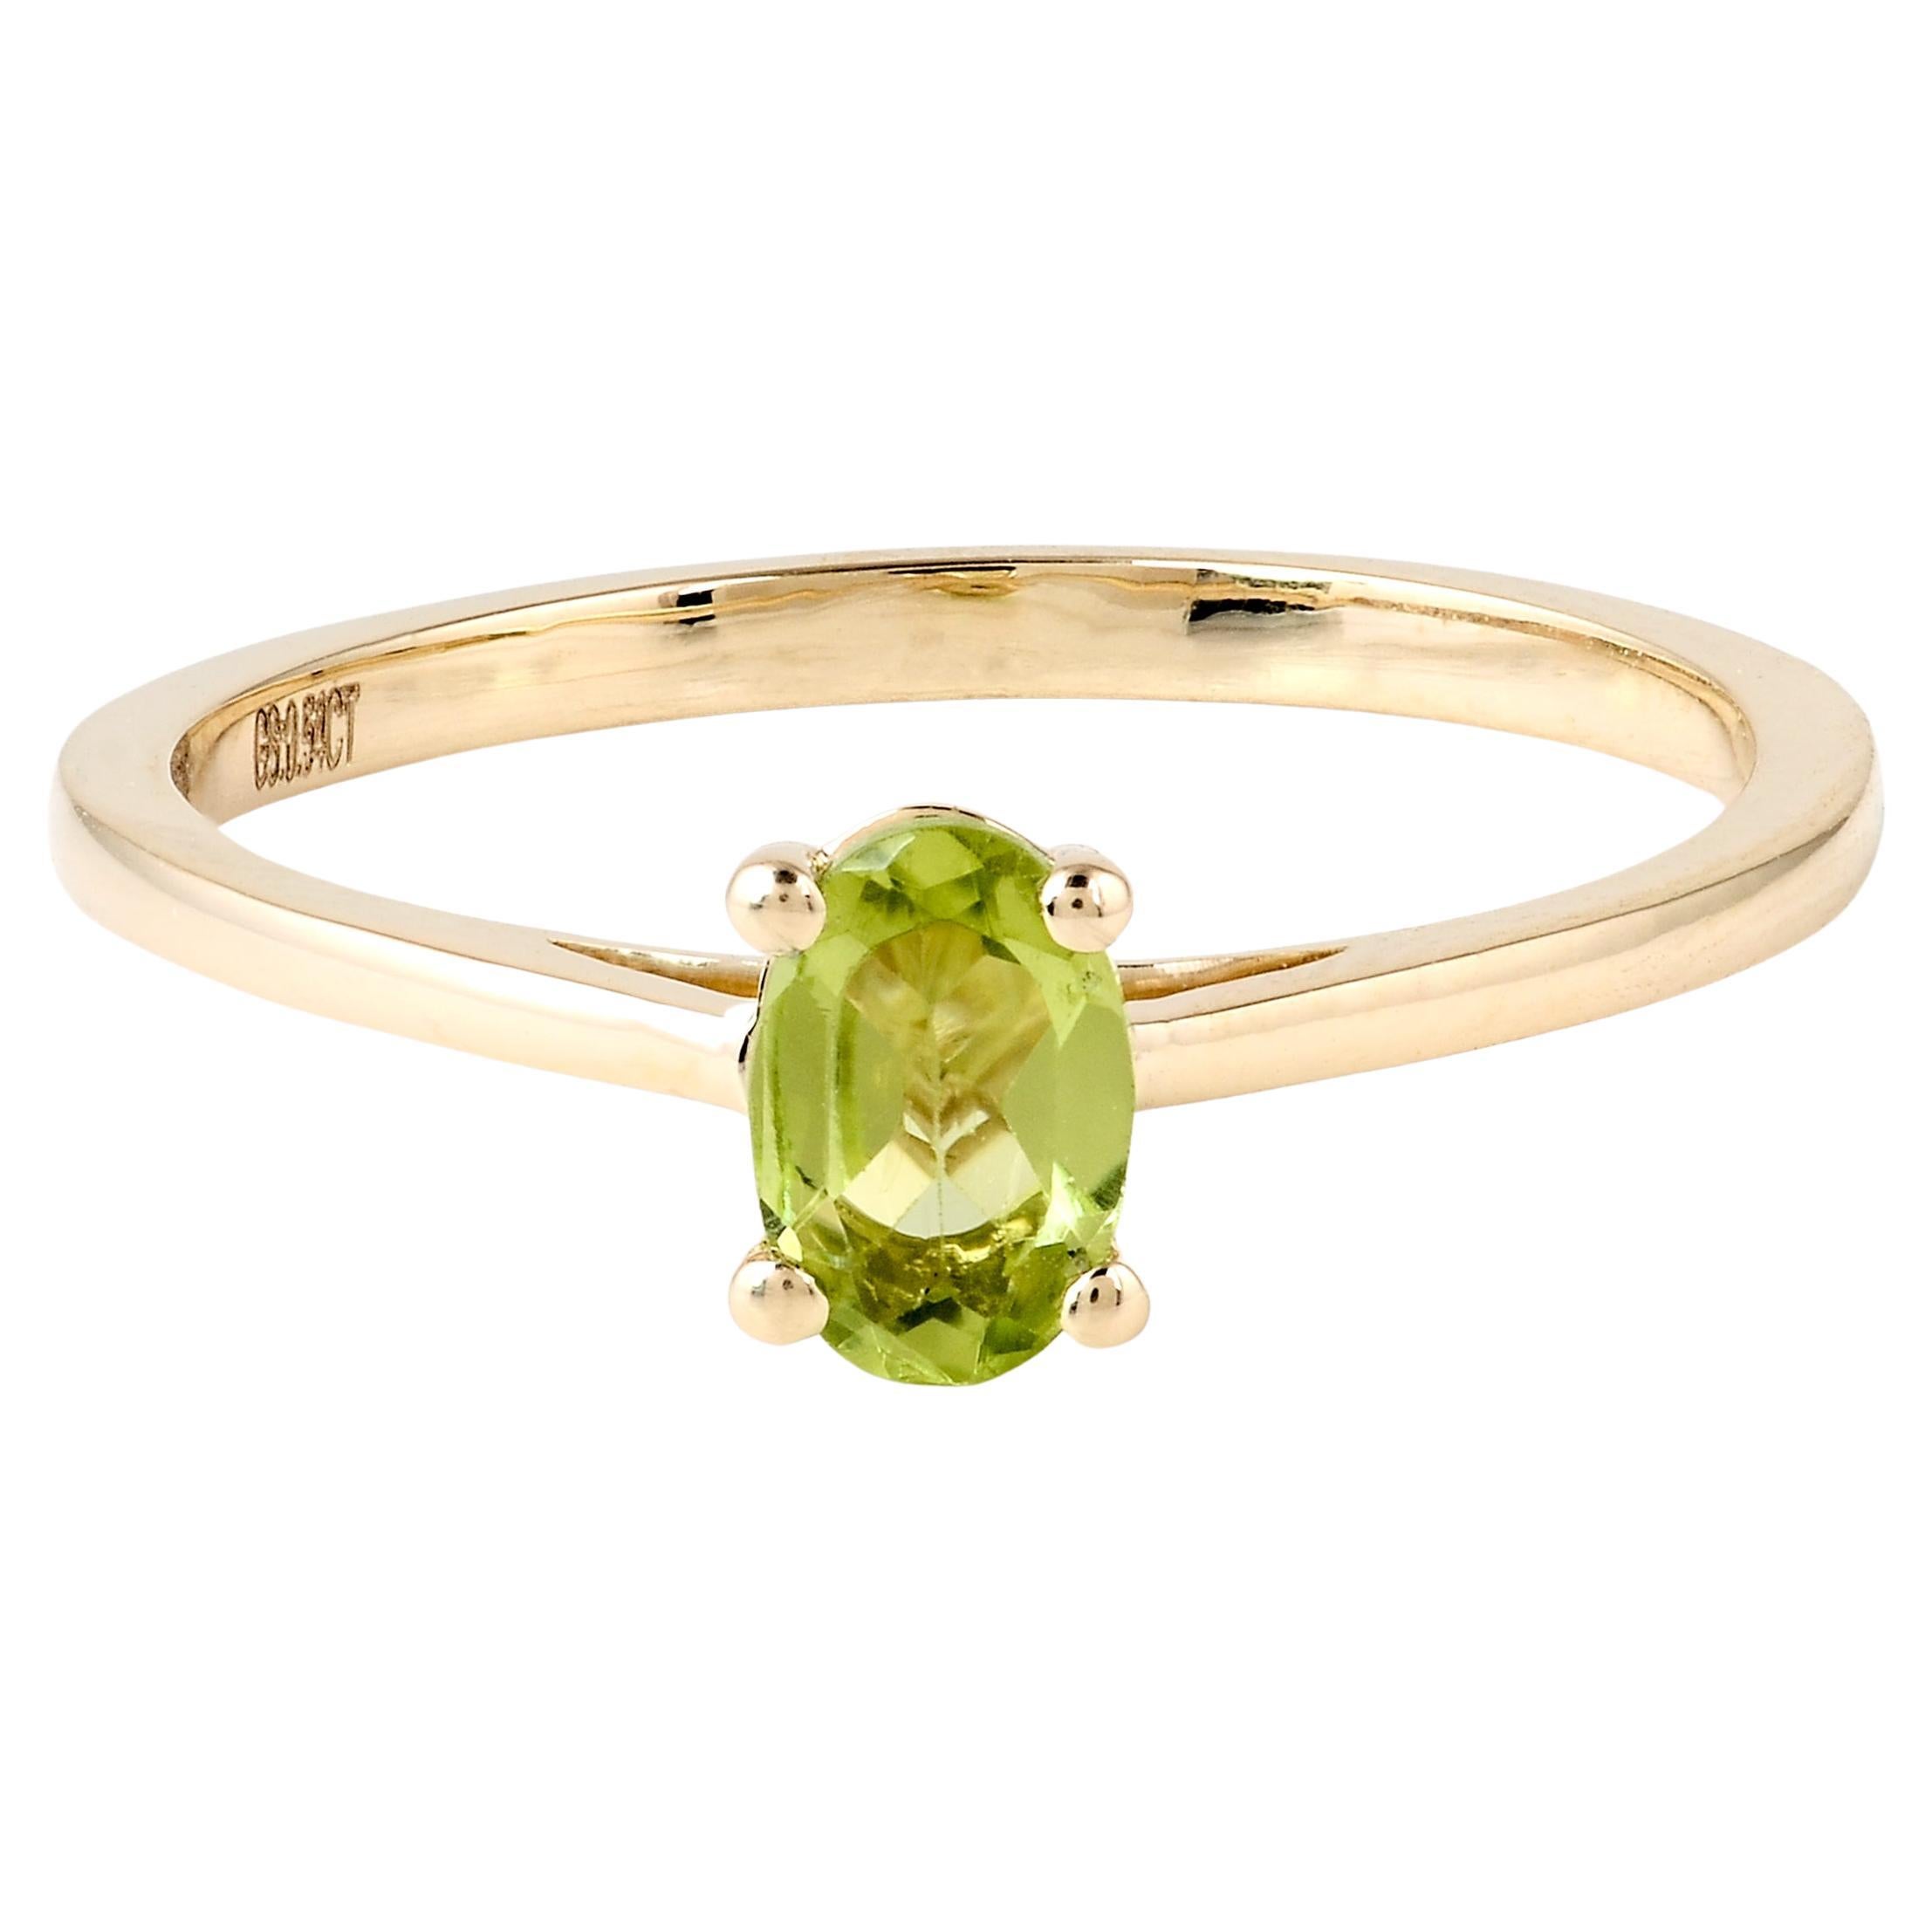 Chic 14K Peridot Cocktail Ring, Size 6.75 - Luxurious Statement Jewelry Piece